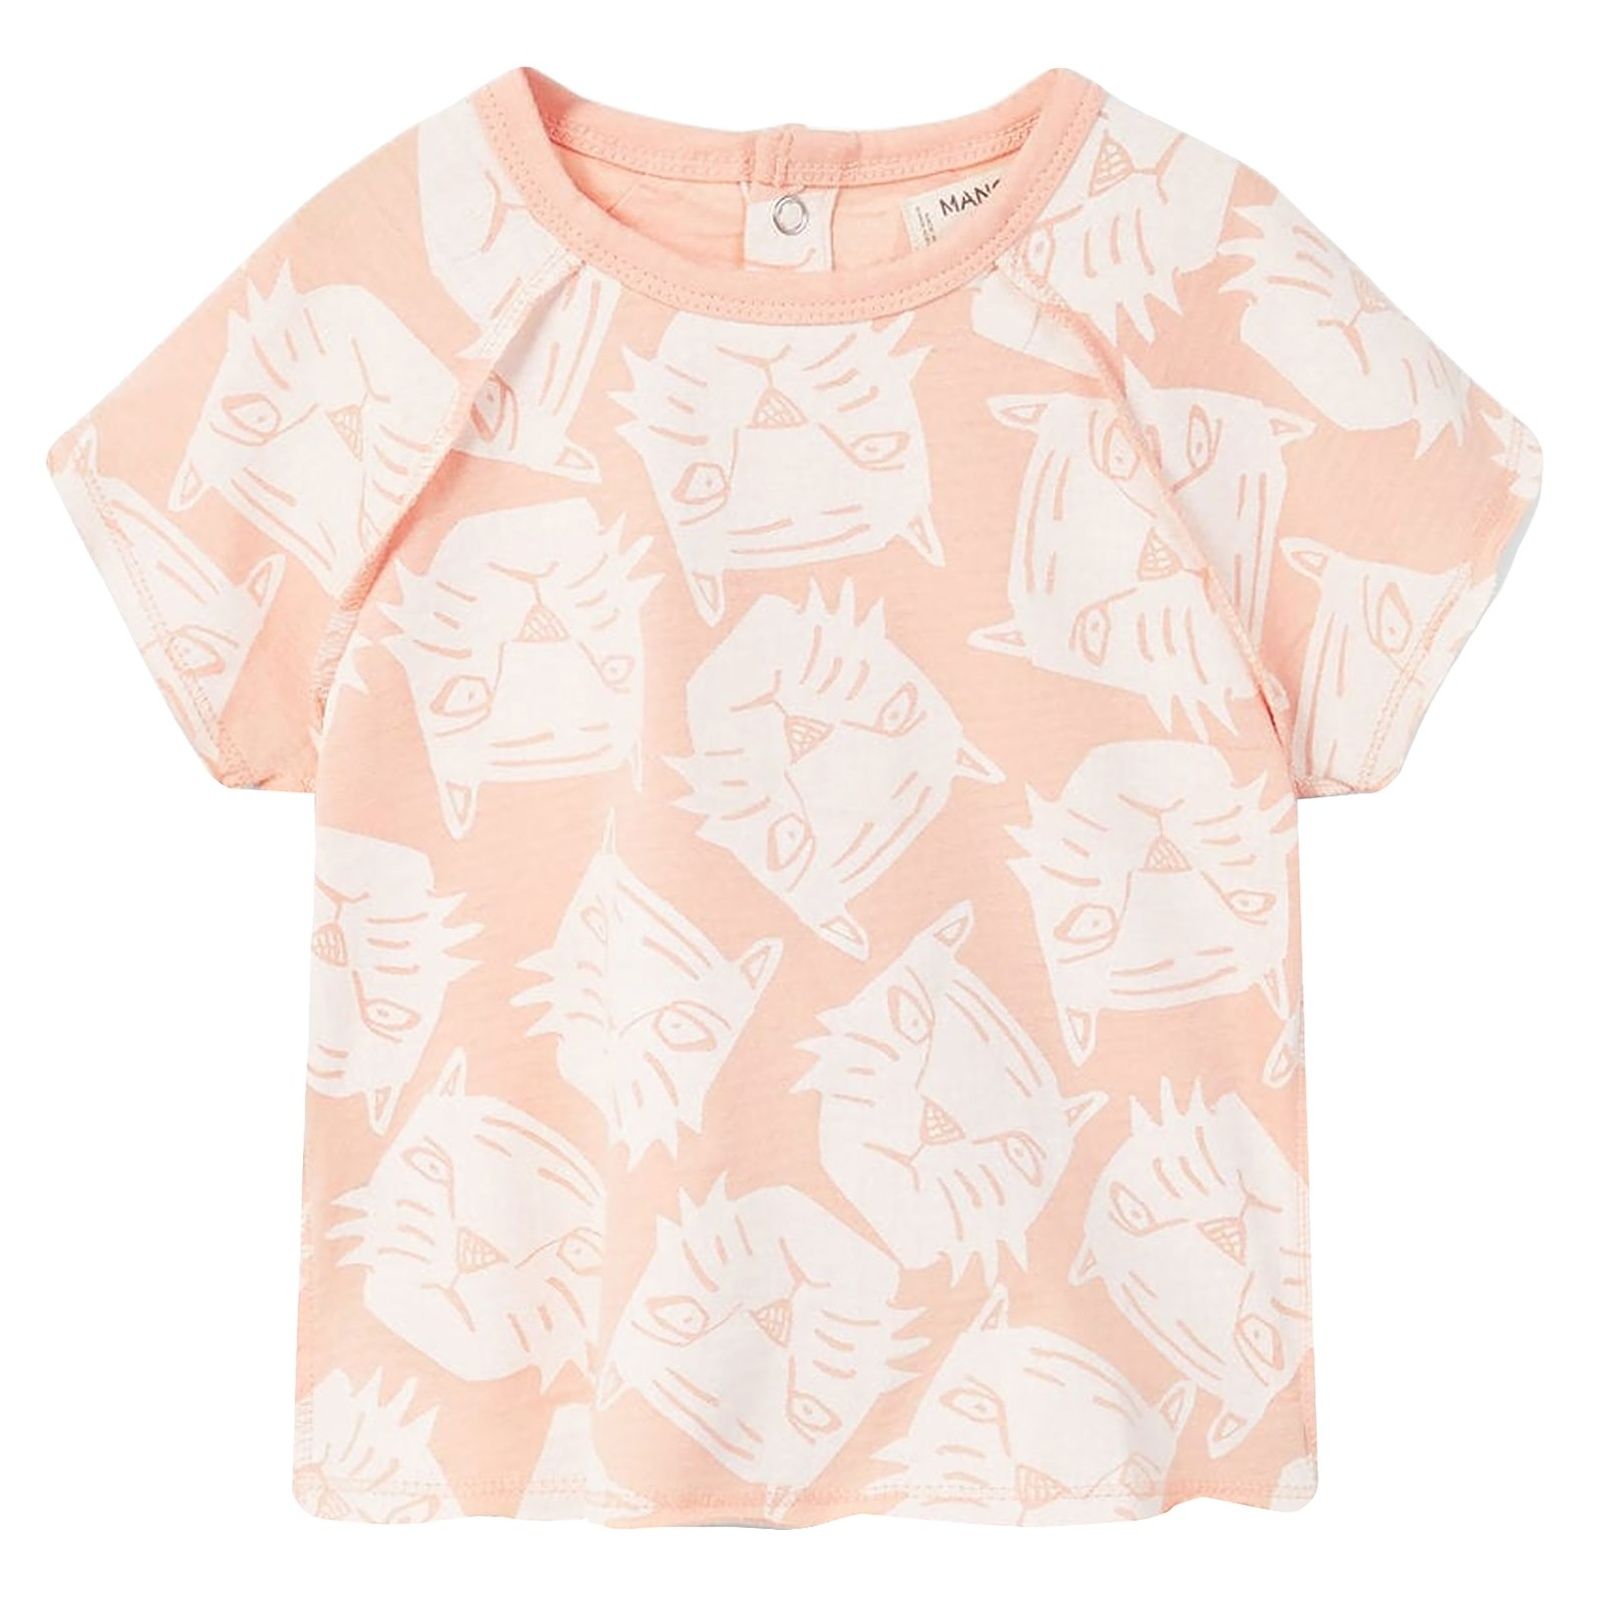 تی شرت نخی یقه گرد پسرانه - مانگو - نارنجي  - 2